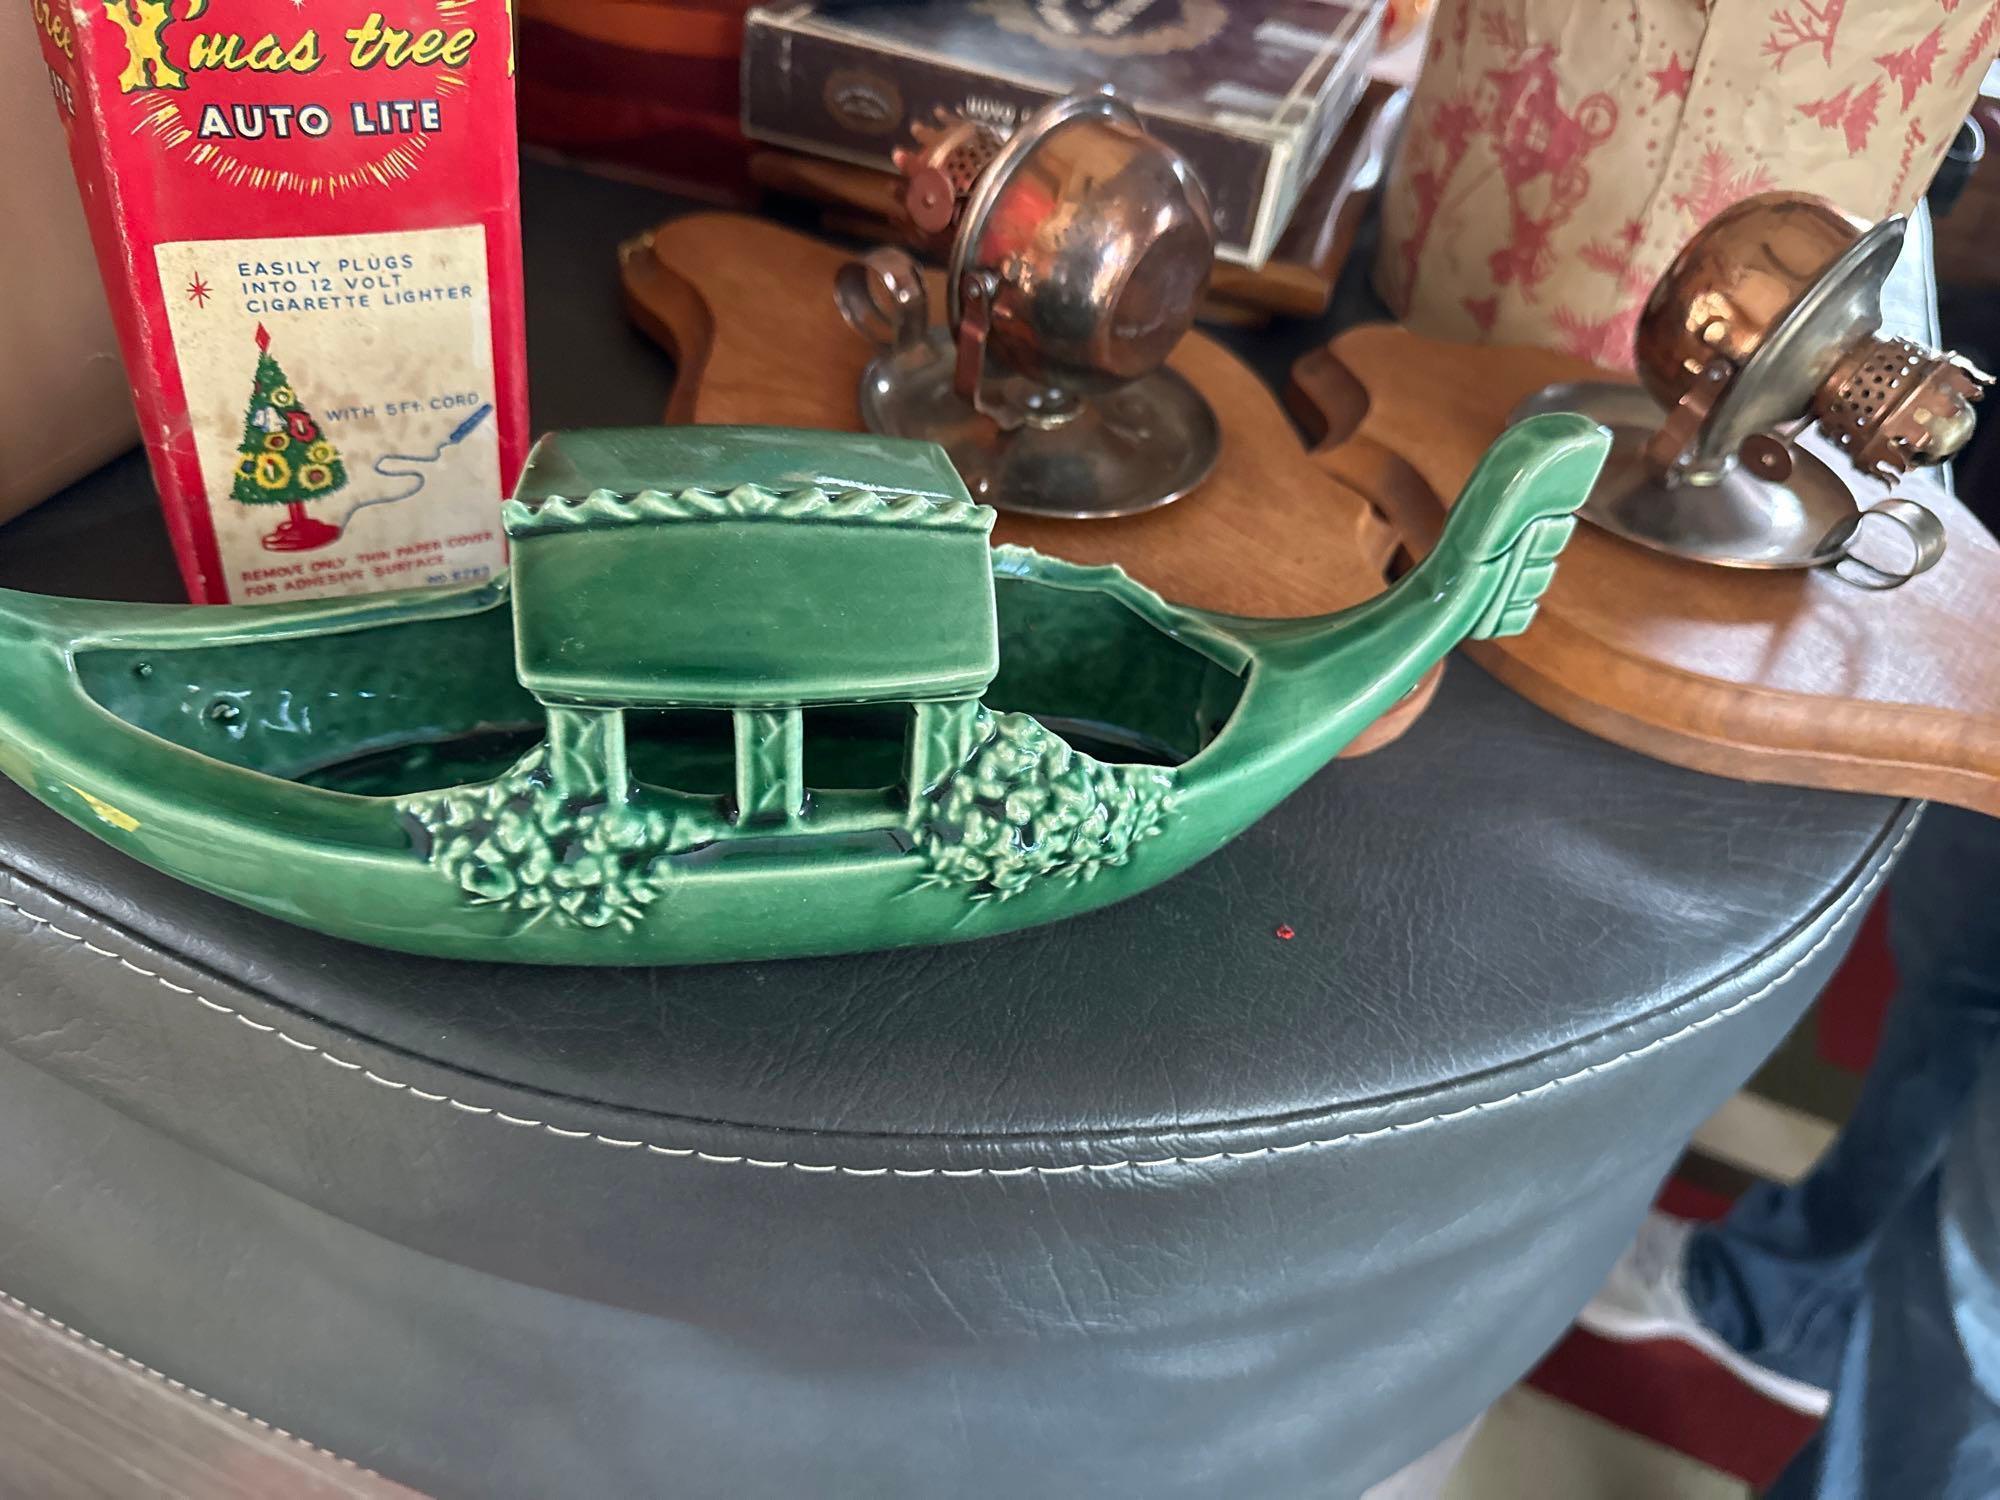 Auto light christmas tree, McCoy boat shaped planter, wooden spools, glass planter peanut jar (no